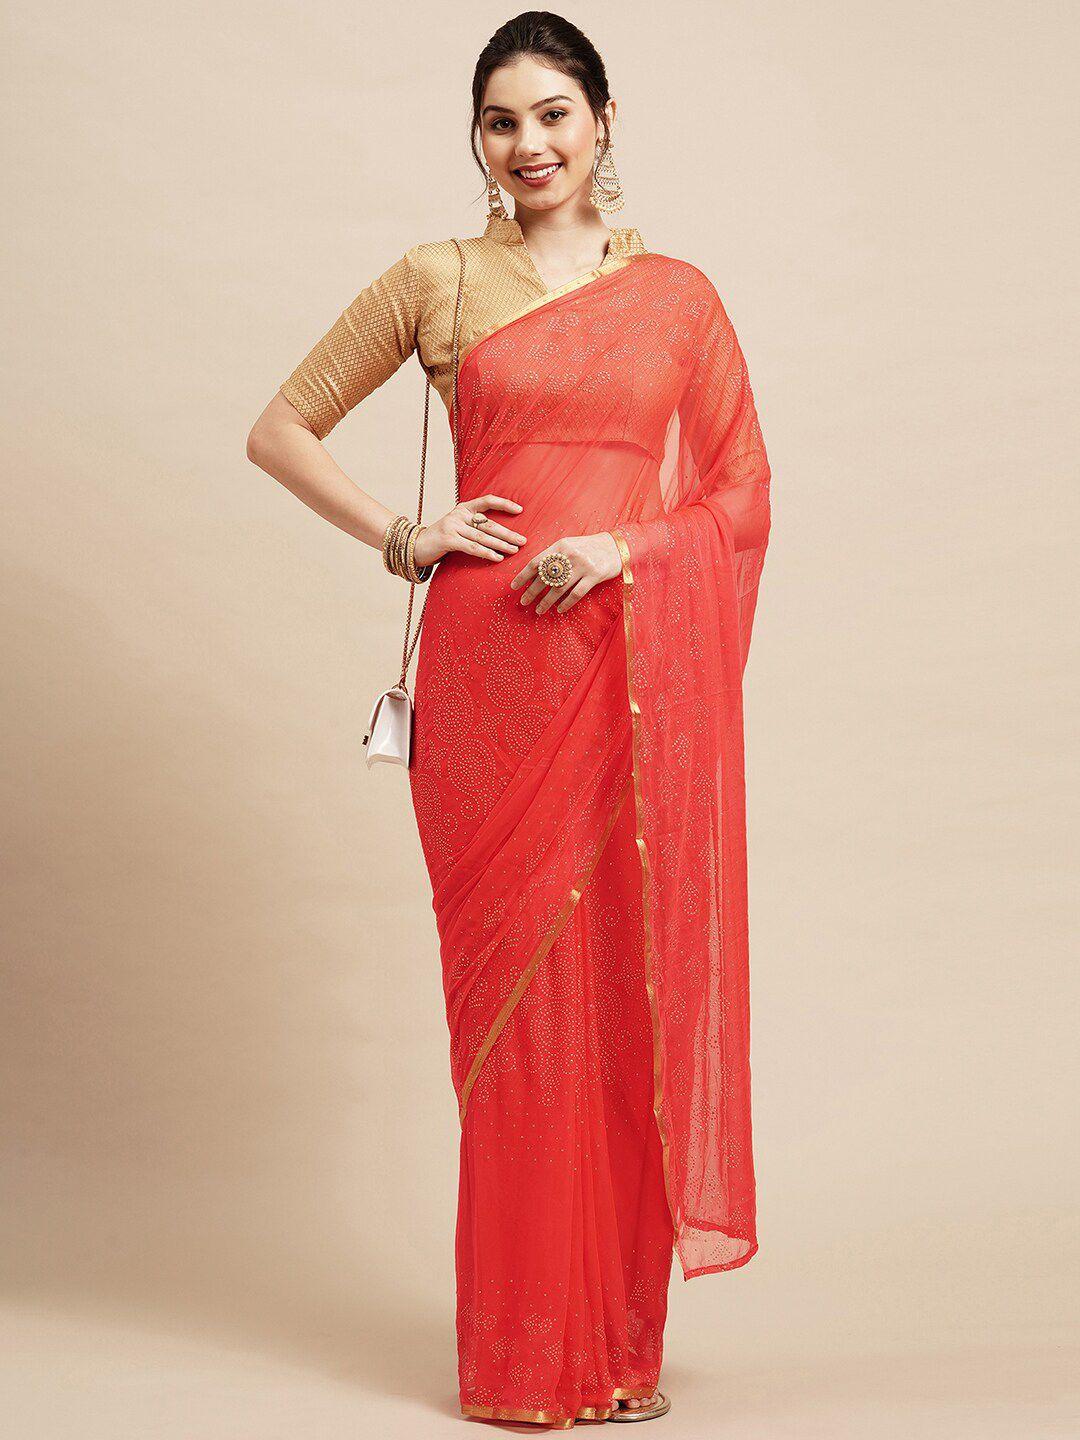 saree mall red & gold-toned floral sarees